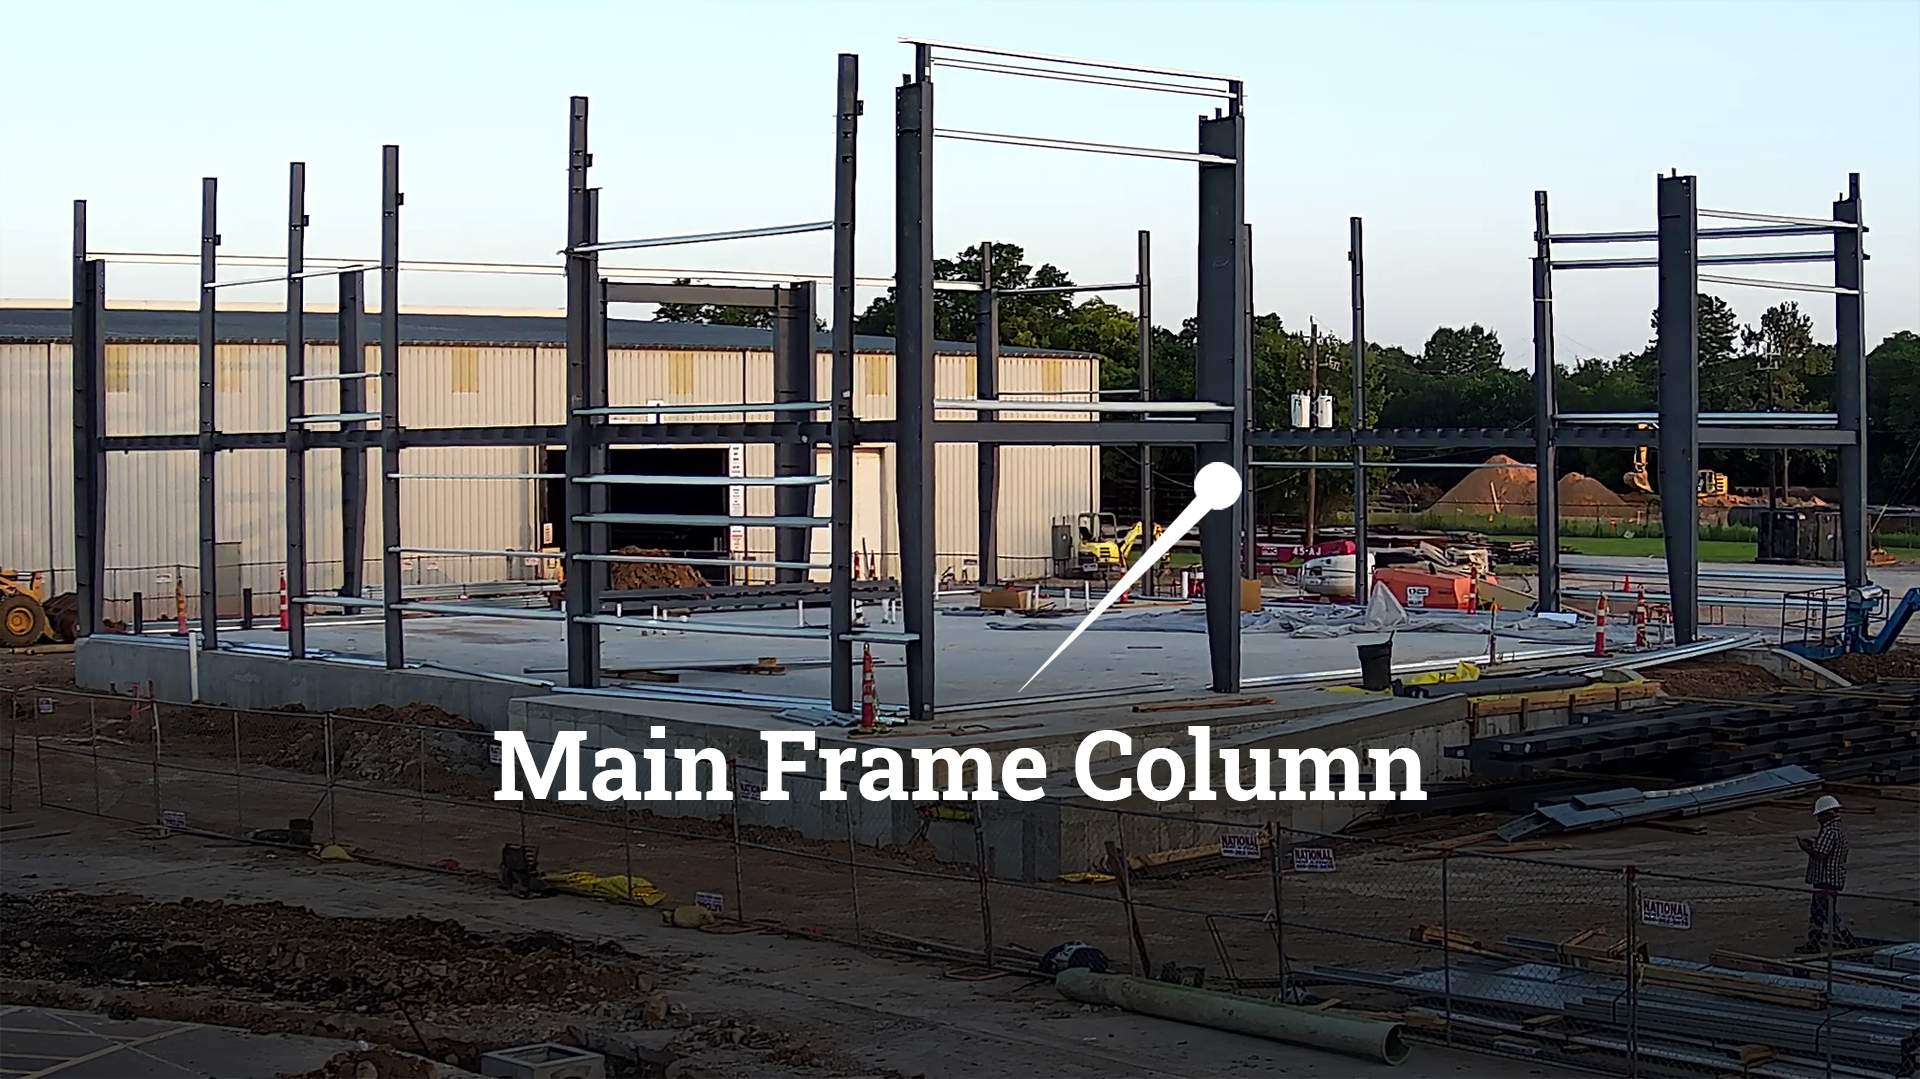 Main Frame Column